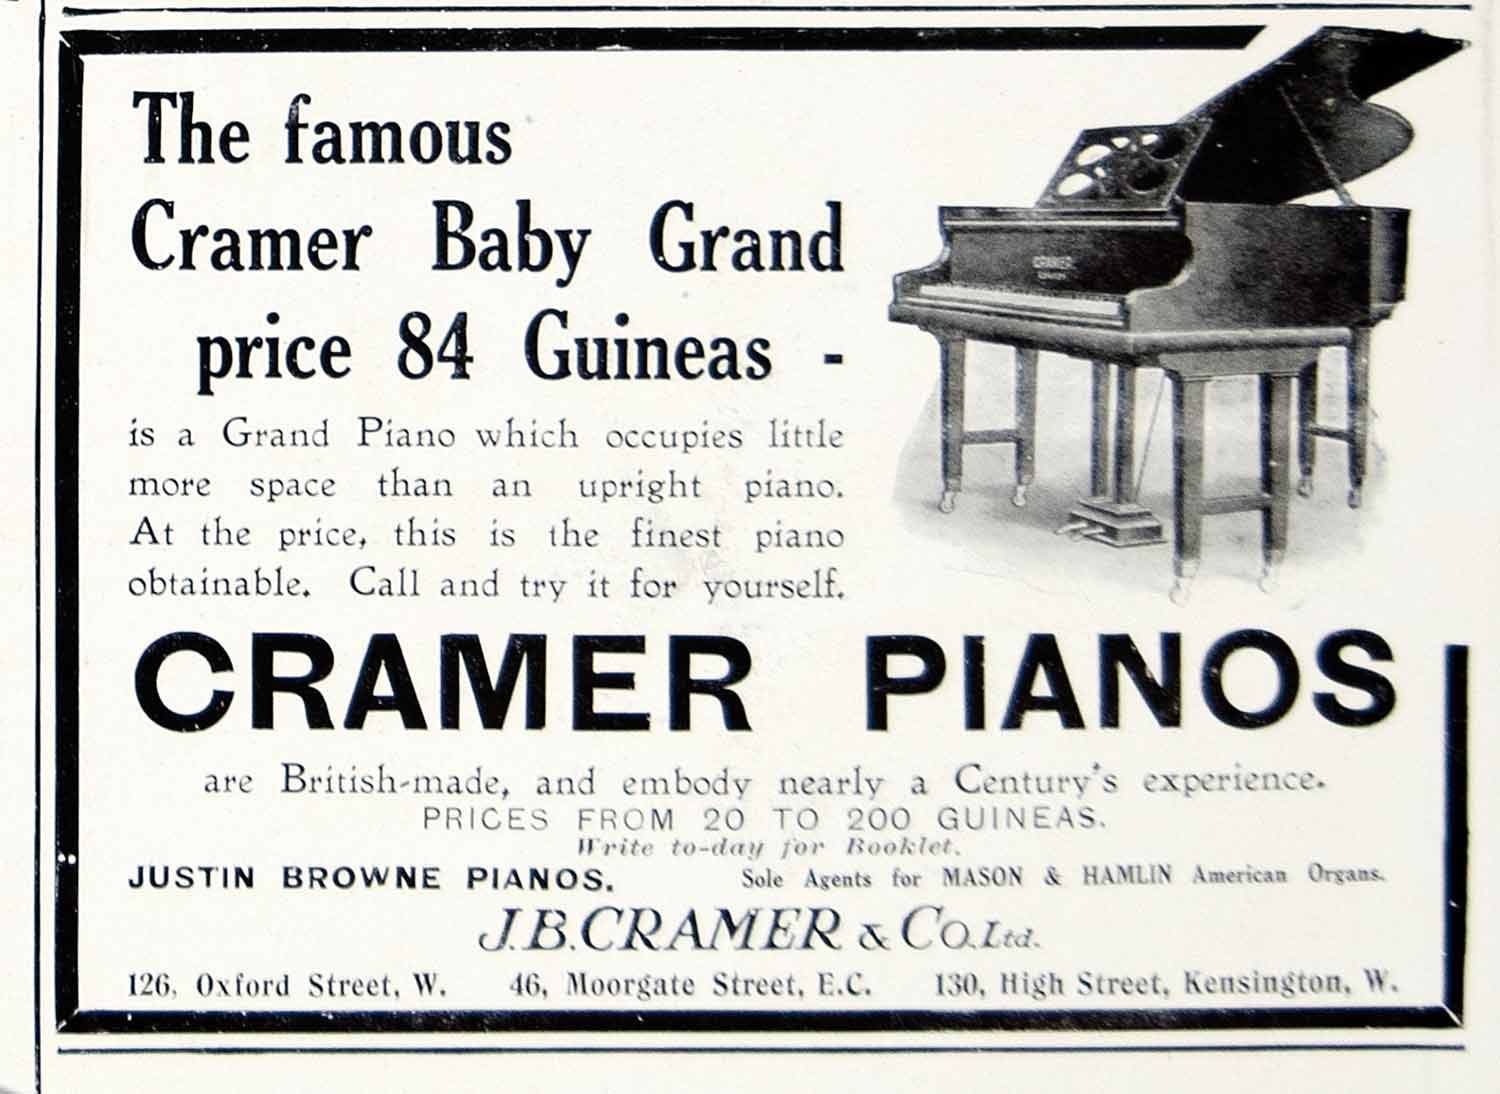 1911 Ad Justin Browne Cramer Baby Grand Pianos Musical Instruments London ILN2